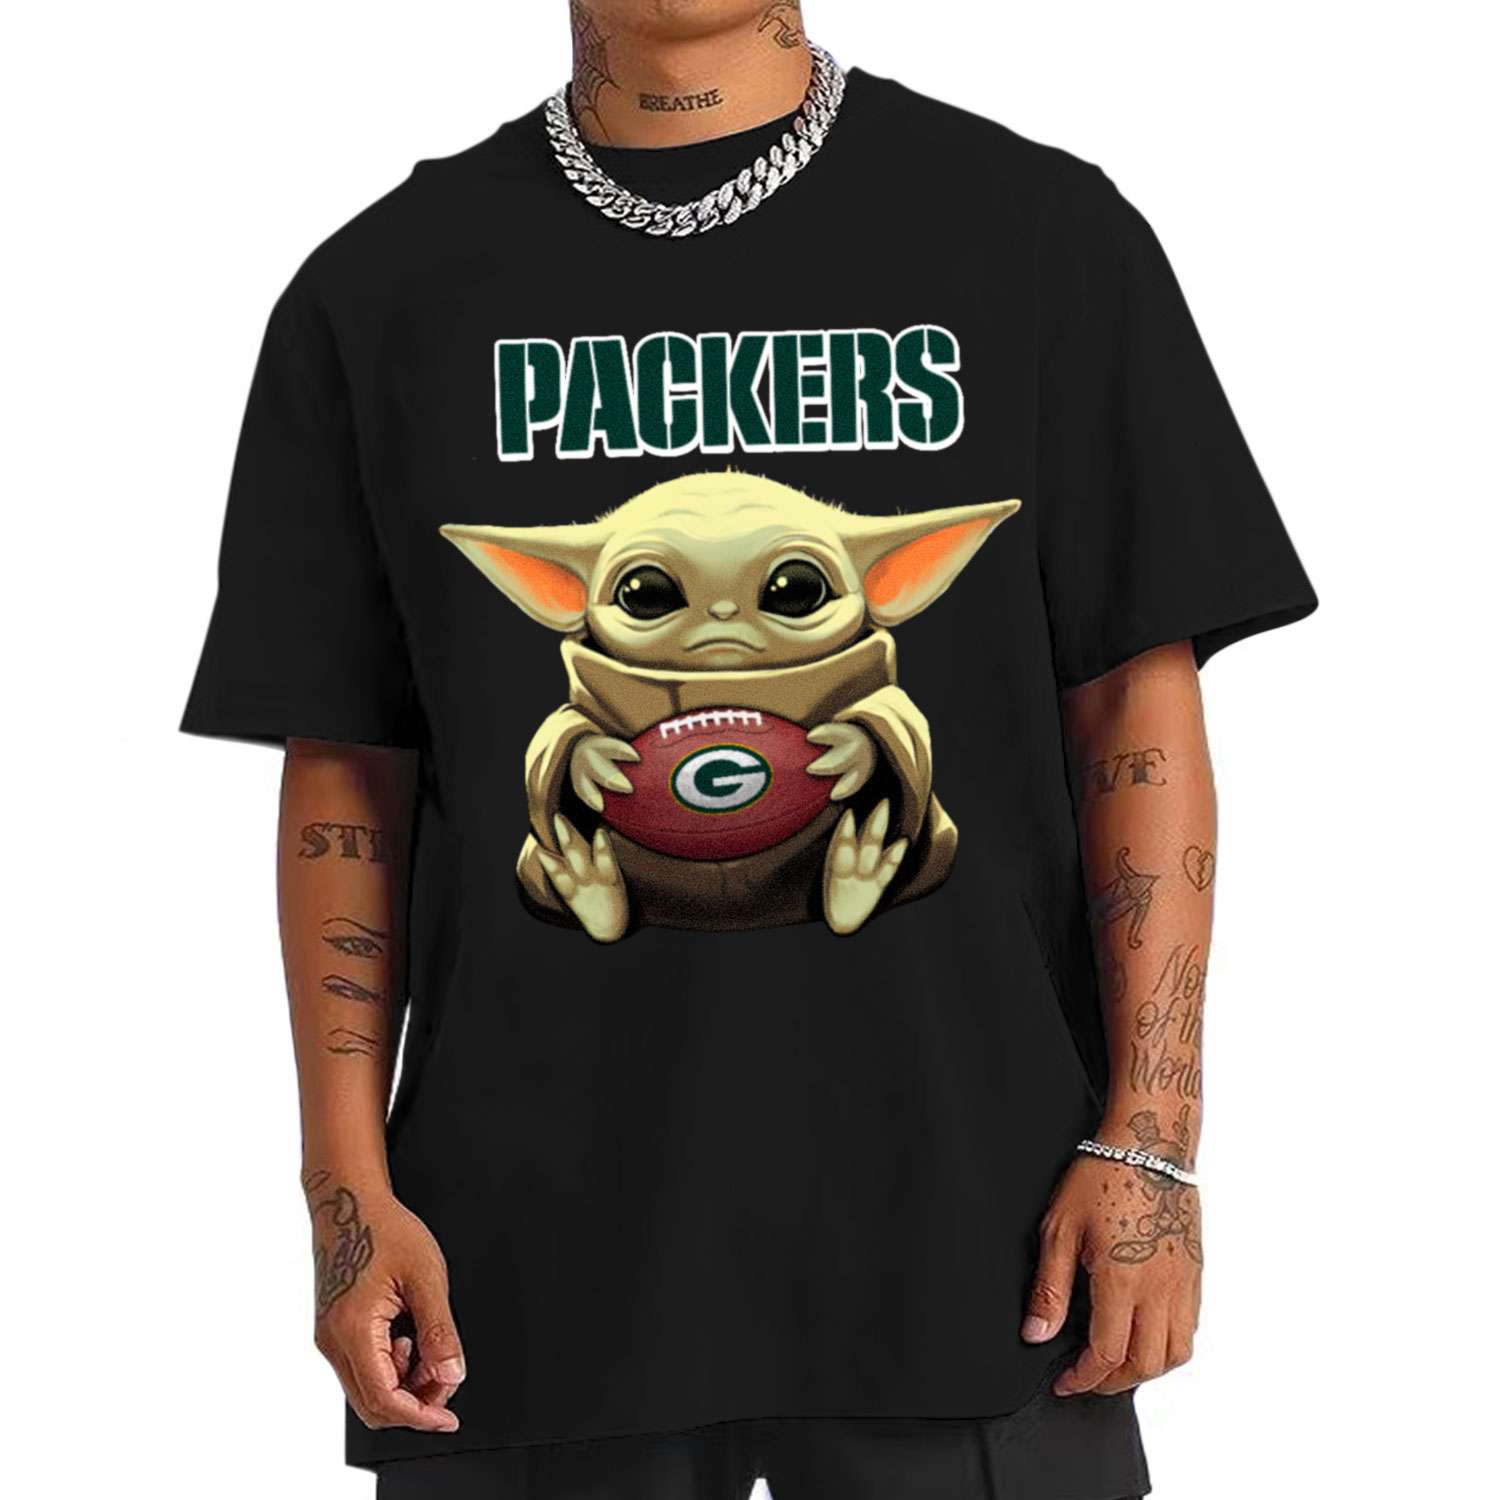 Green Bay Packers Baby Yoda Shirt